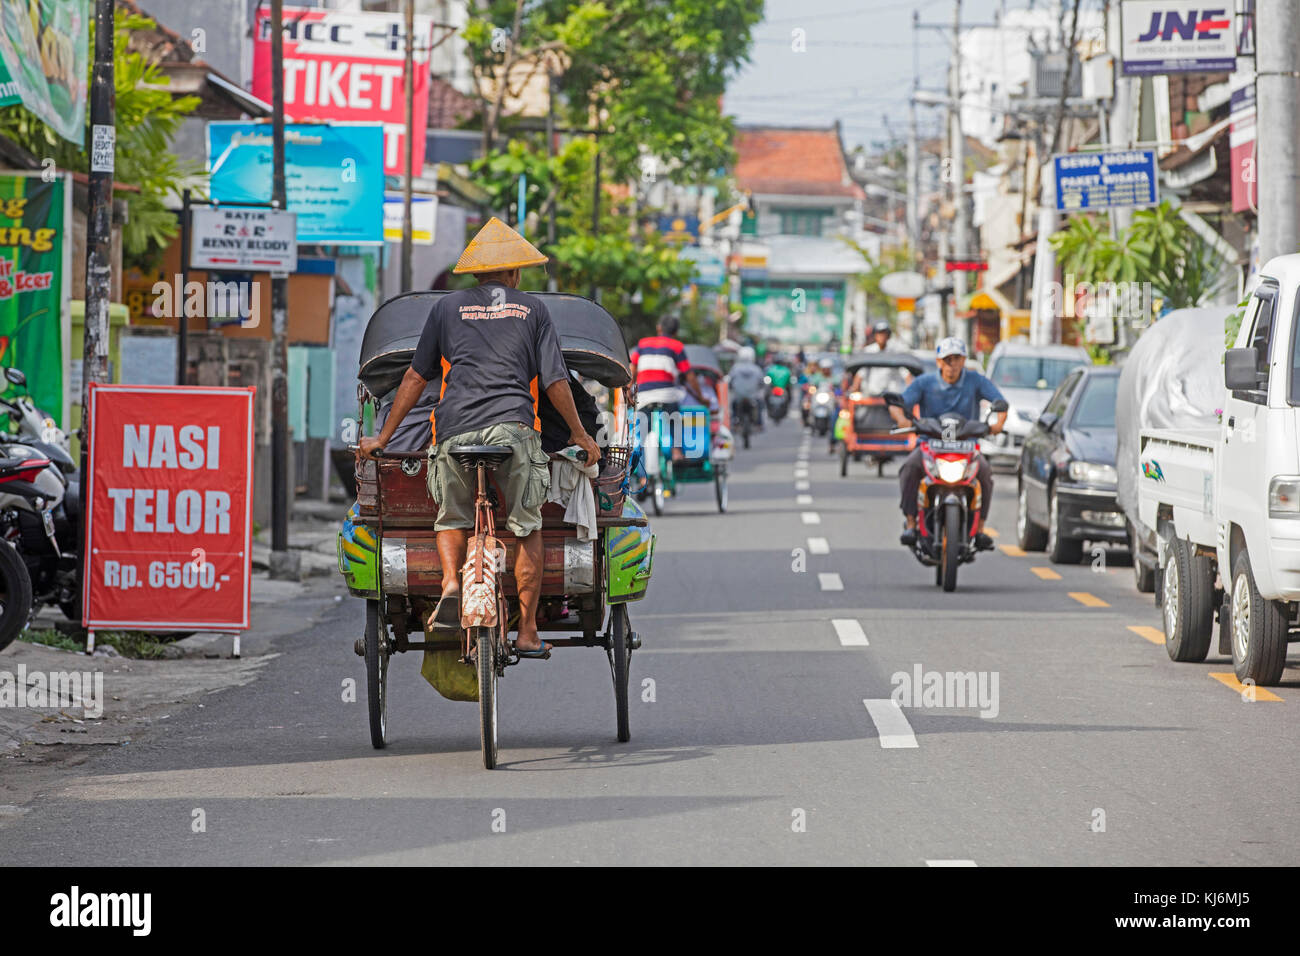 Cycle rickshaws / becak for public transport in the city Yogyakarta, Java, Indonesia Stock Photo